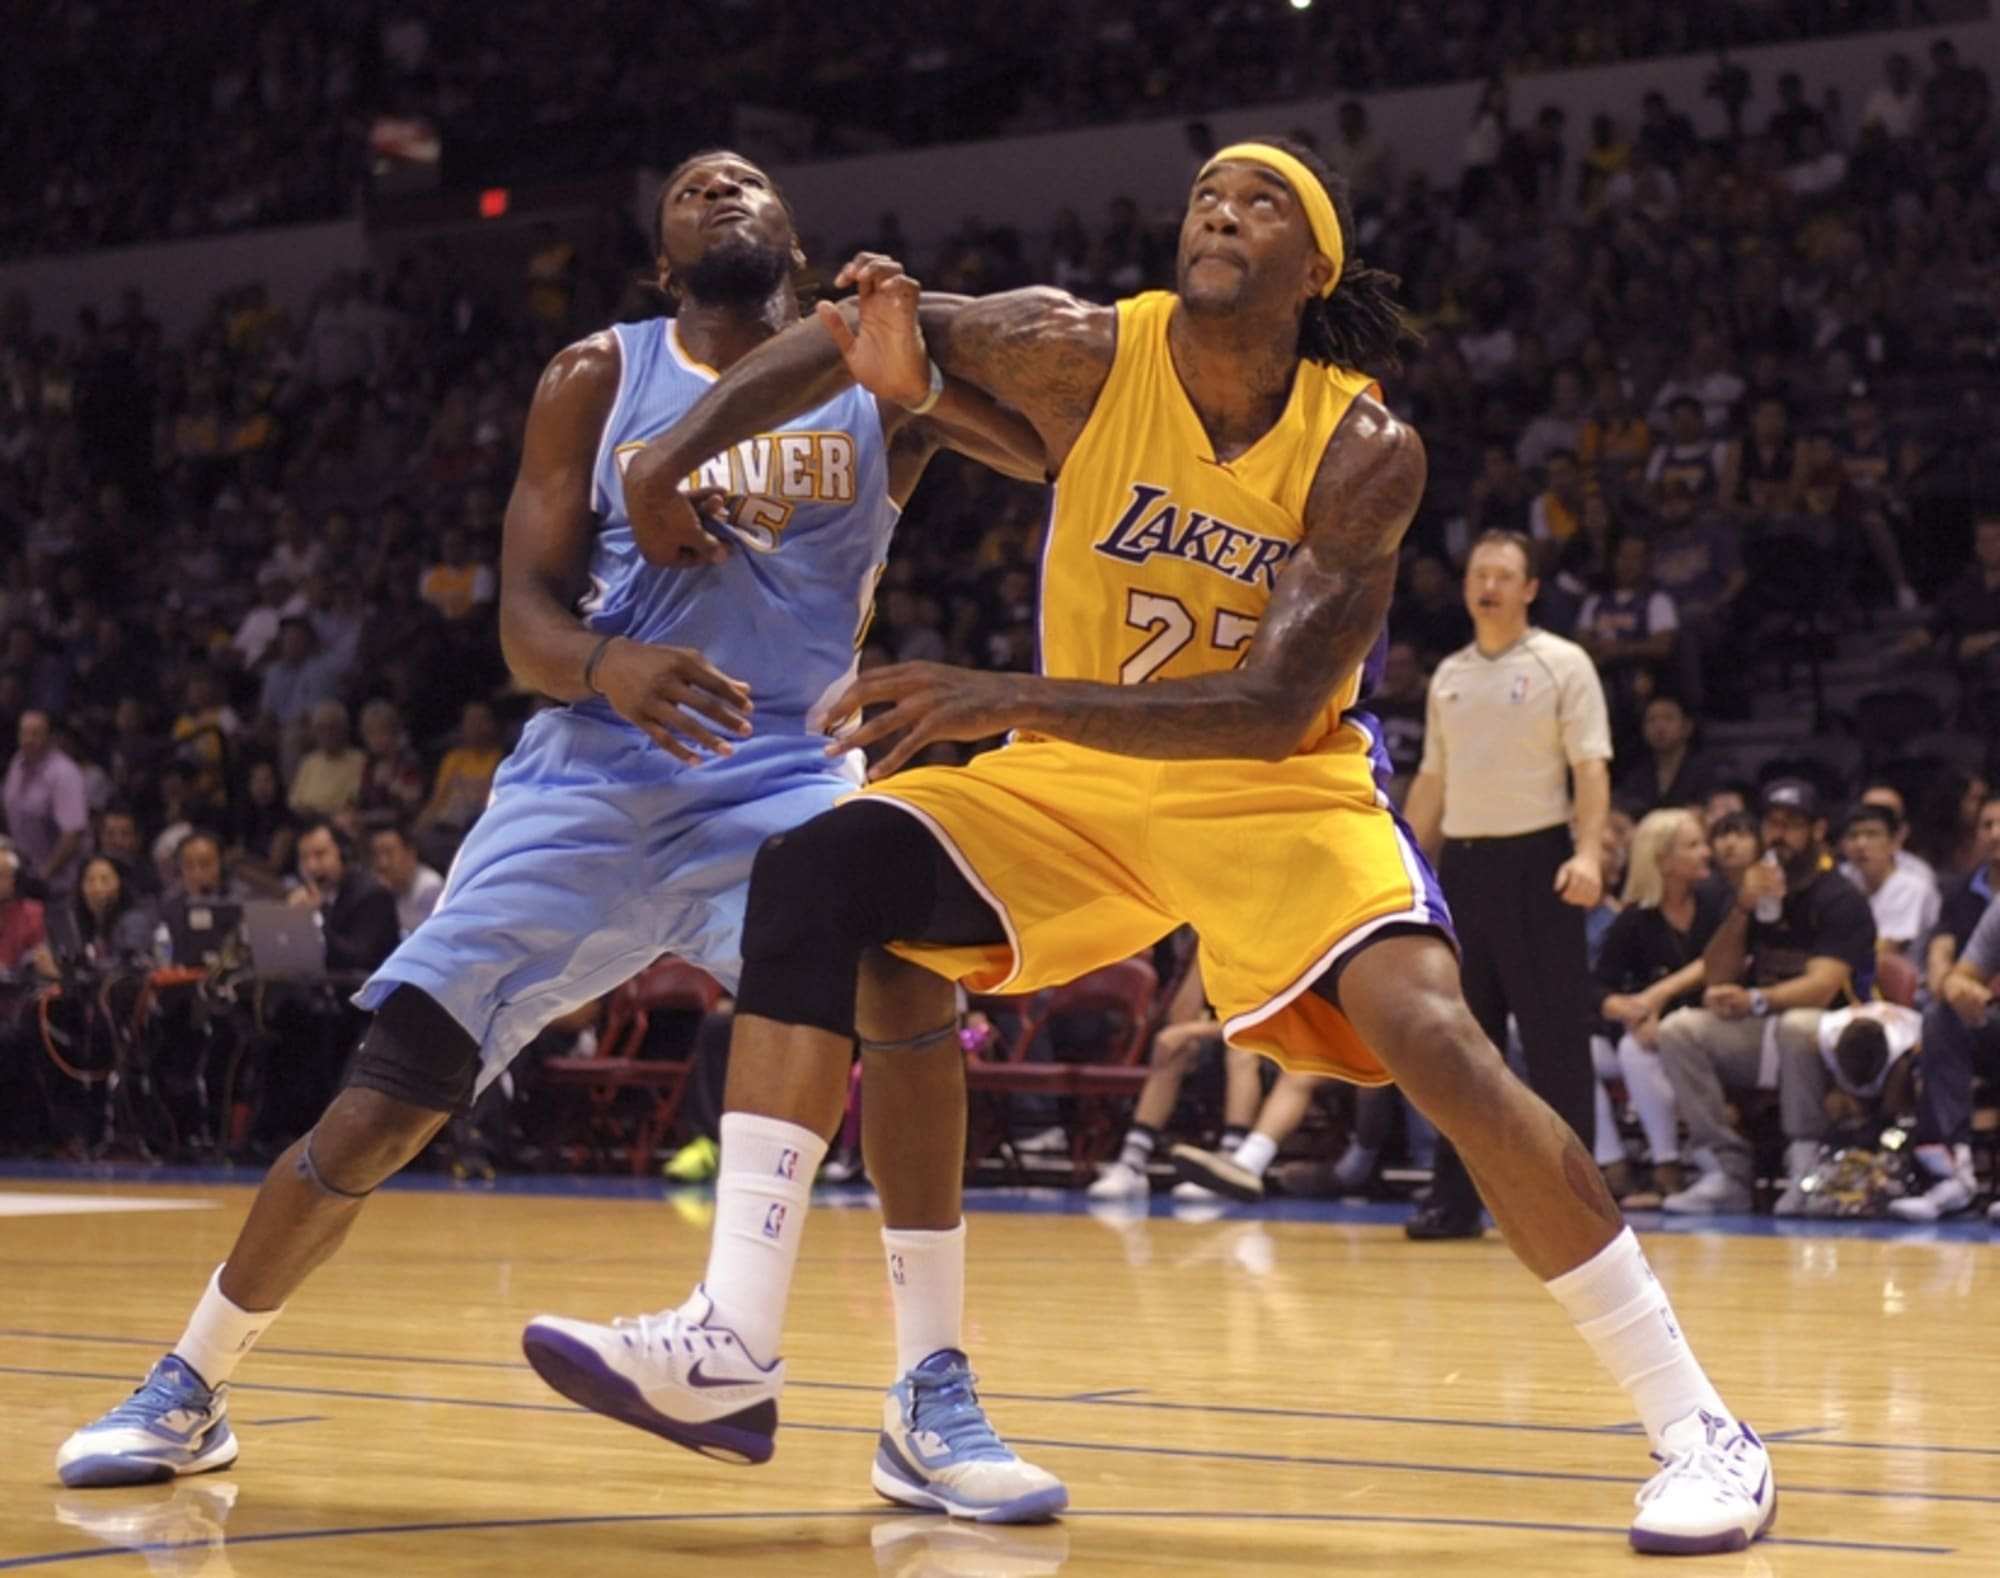 barajar Presa Oblicuo Los Angeles Lakers' Jordan Hill In For a Big Season?